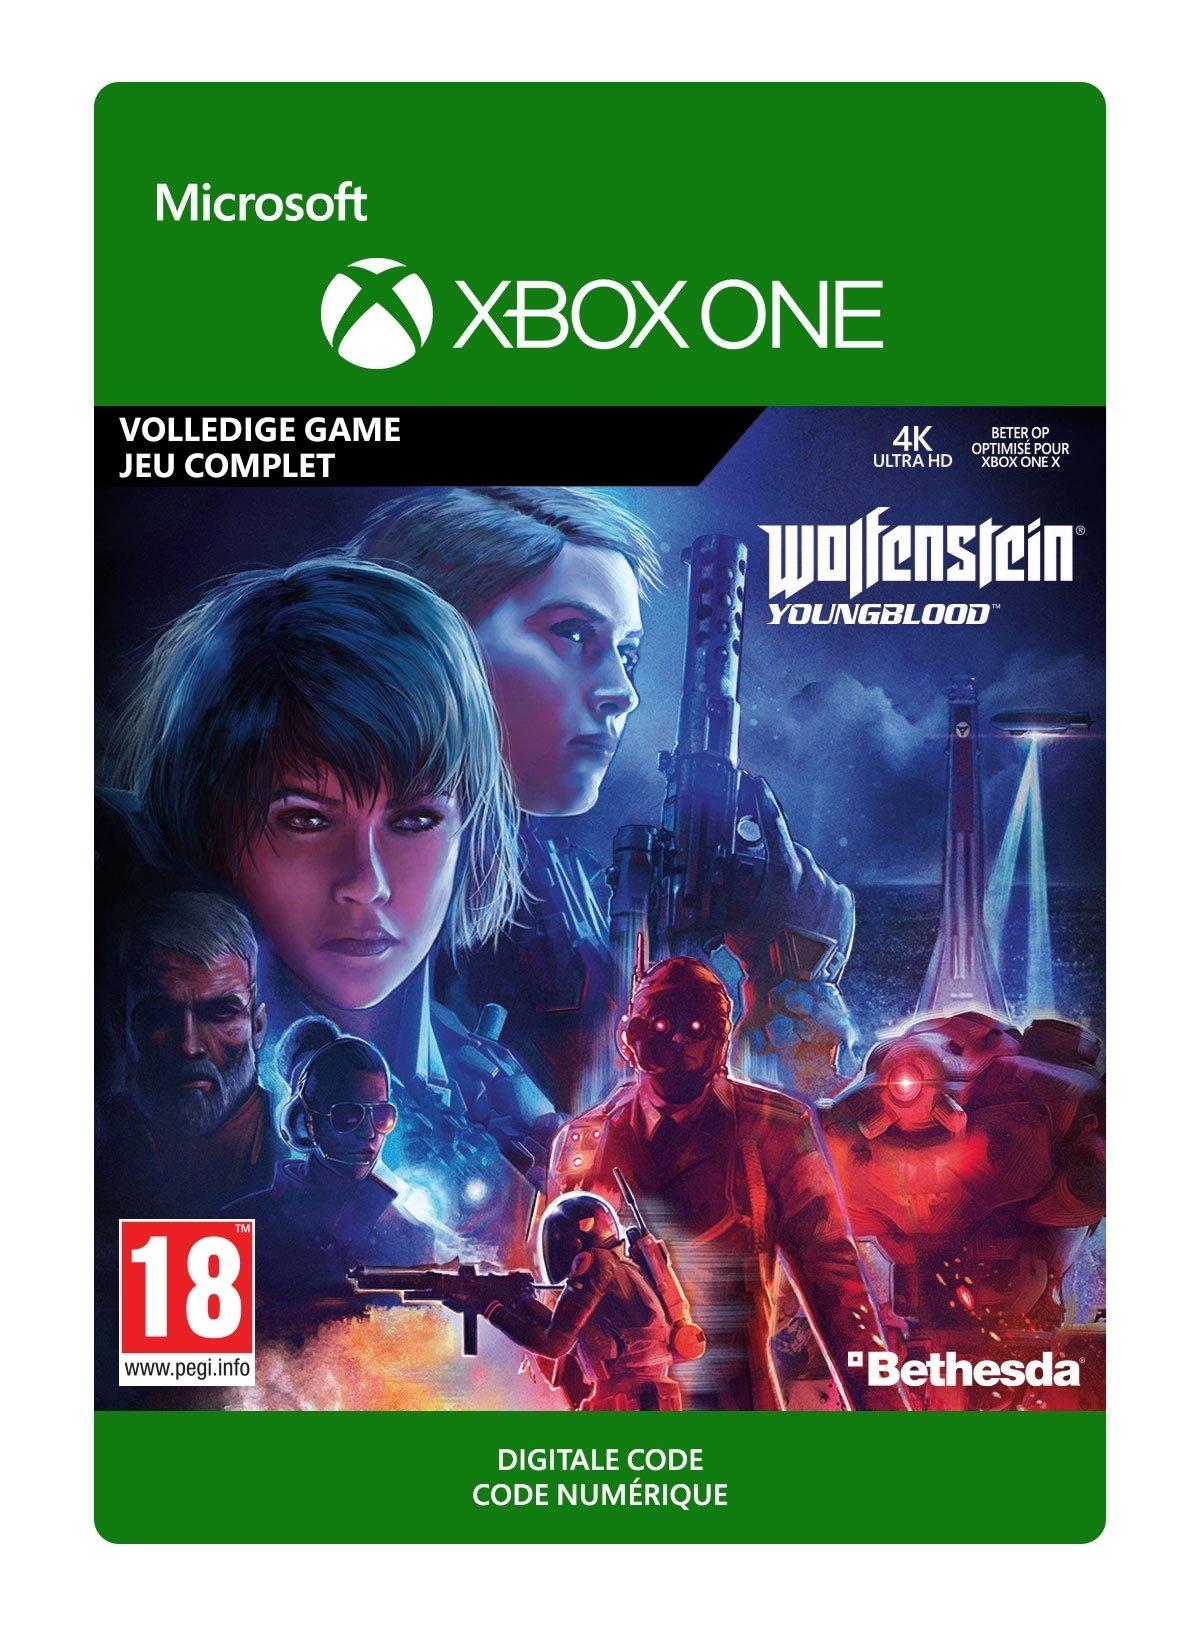 Wolfenstein: Youngblood - Xbox One - Game | G3Q-00758 (9a2096e3-2c4d-4649-8e0f-27f24e37ed03)